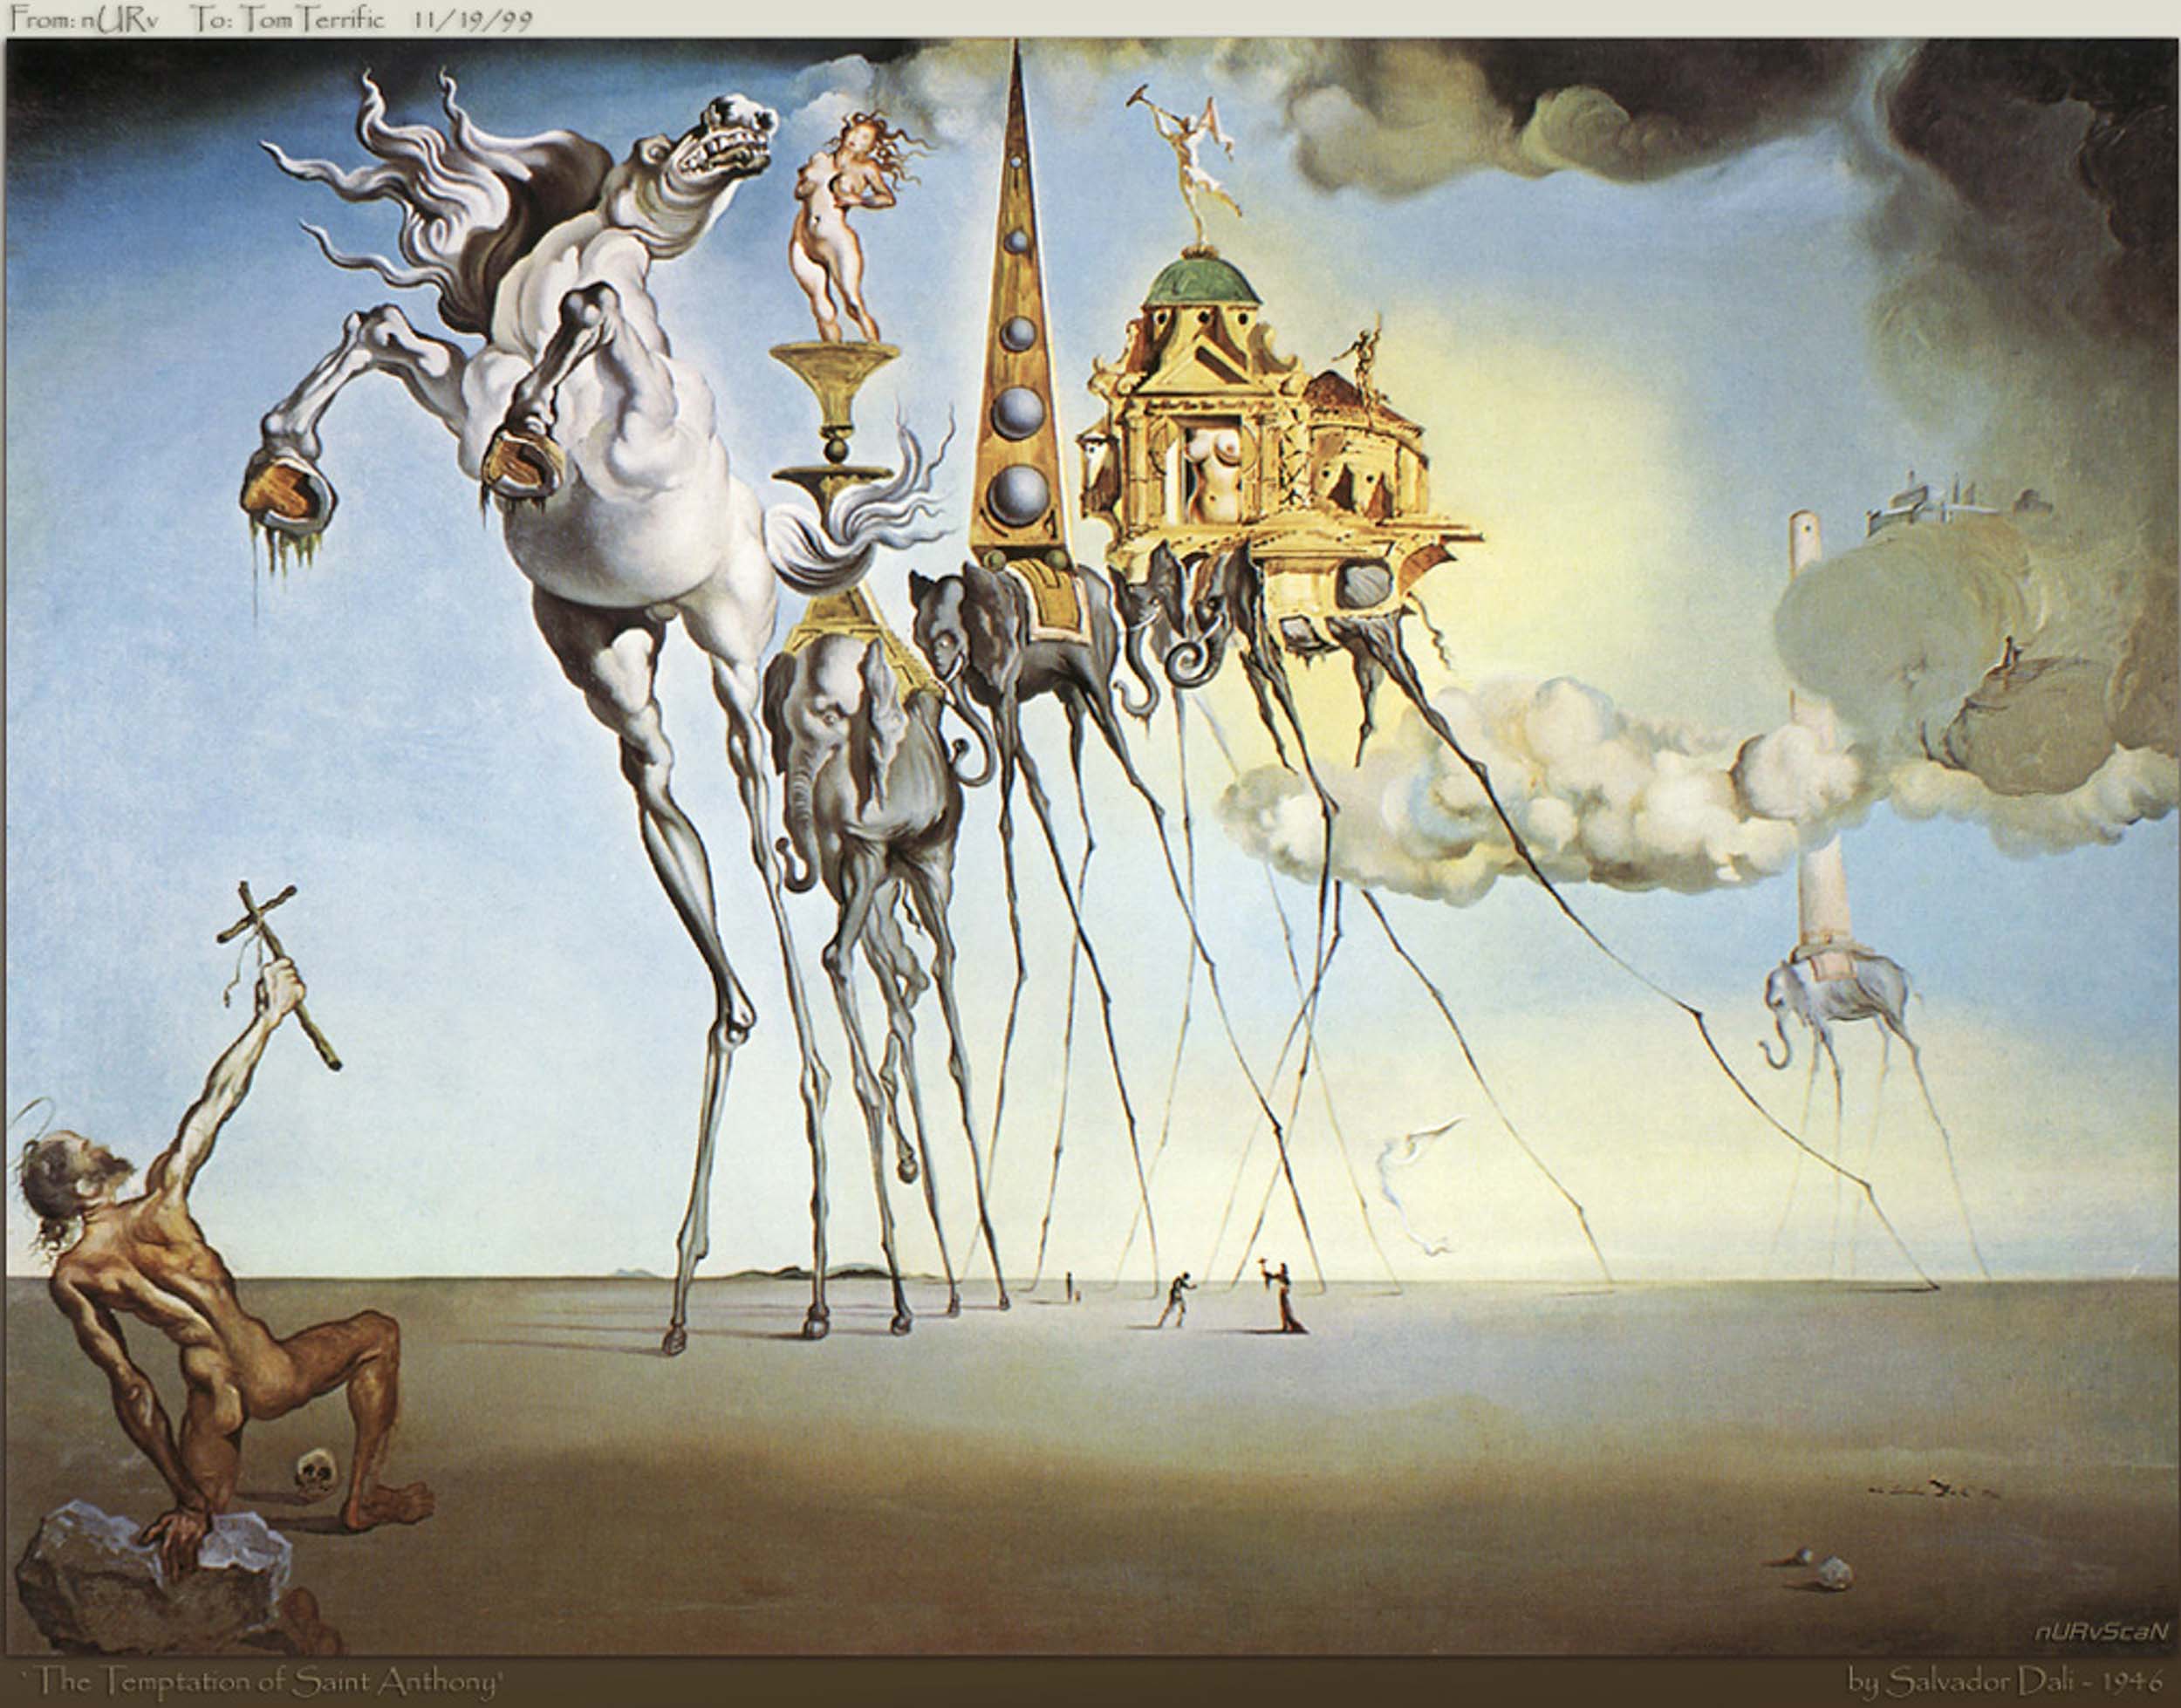 Salvador Dalí's The Persistence of Memory - The Hour Glass Australia